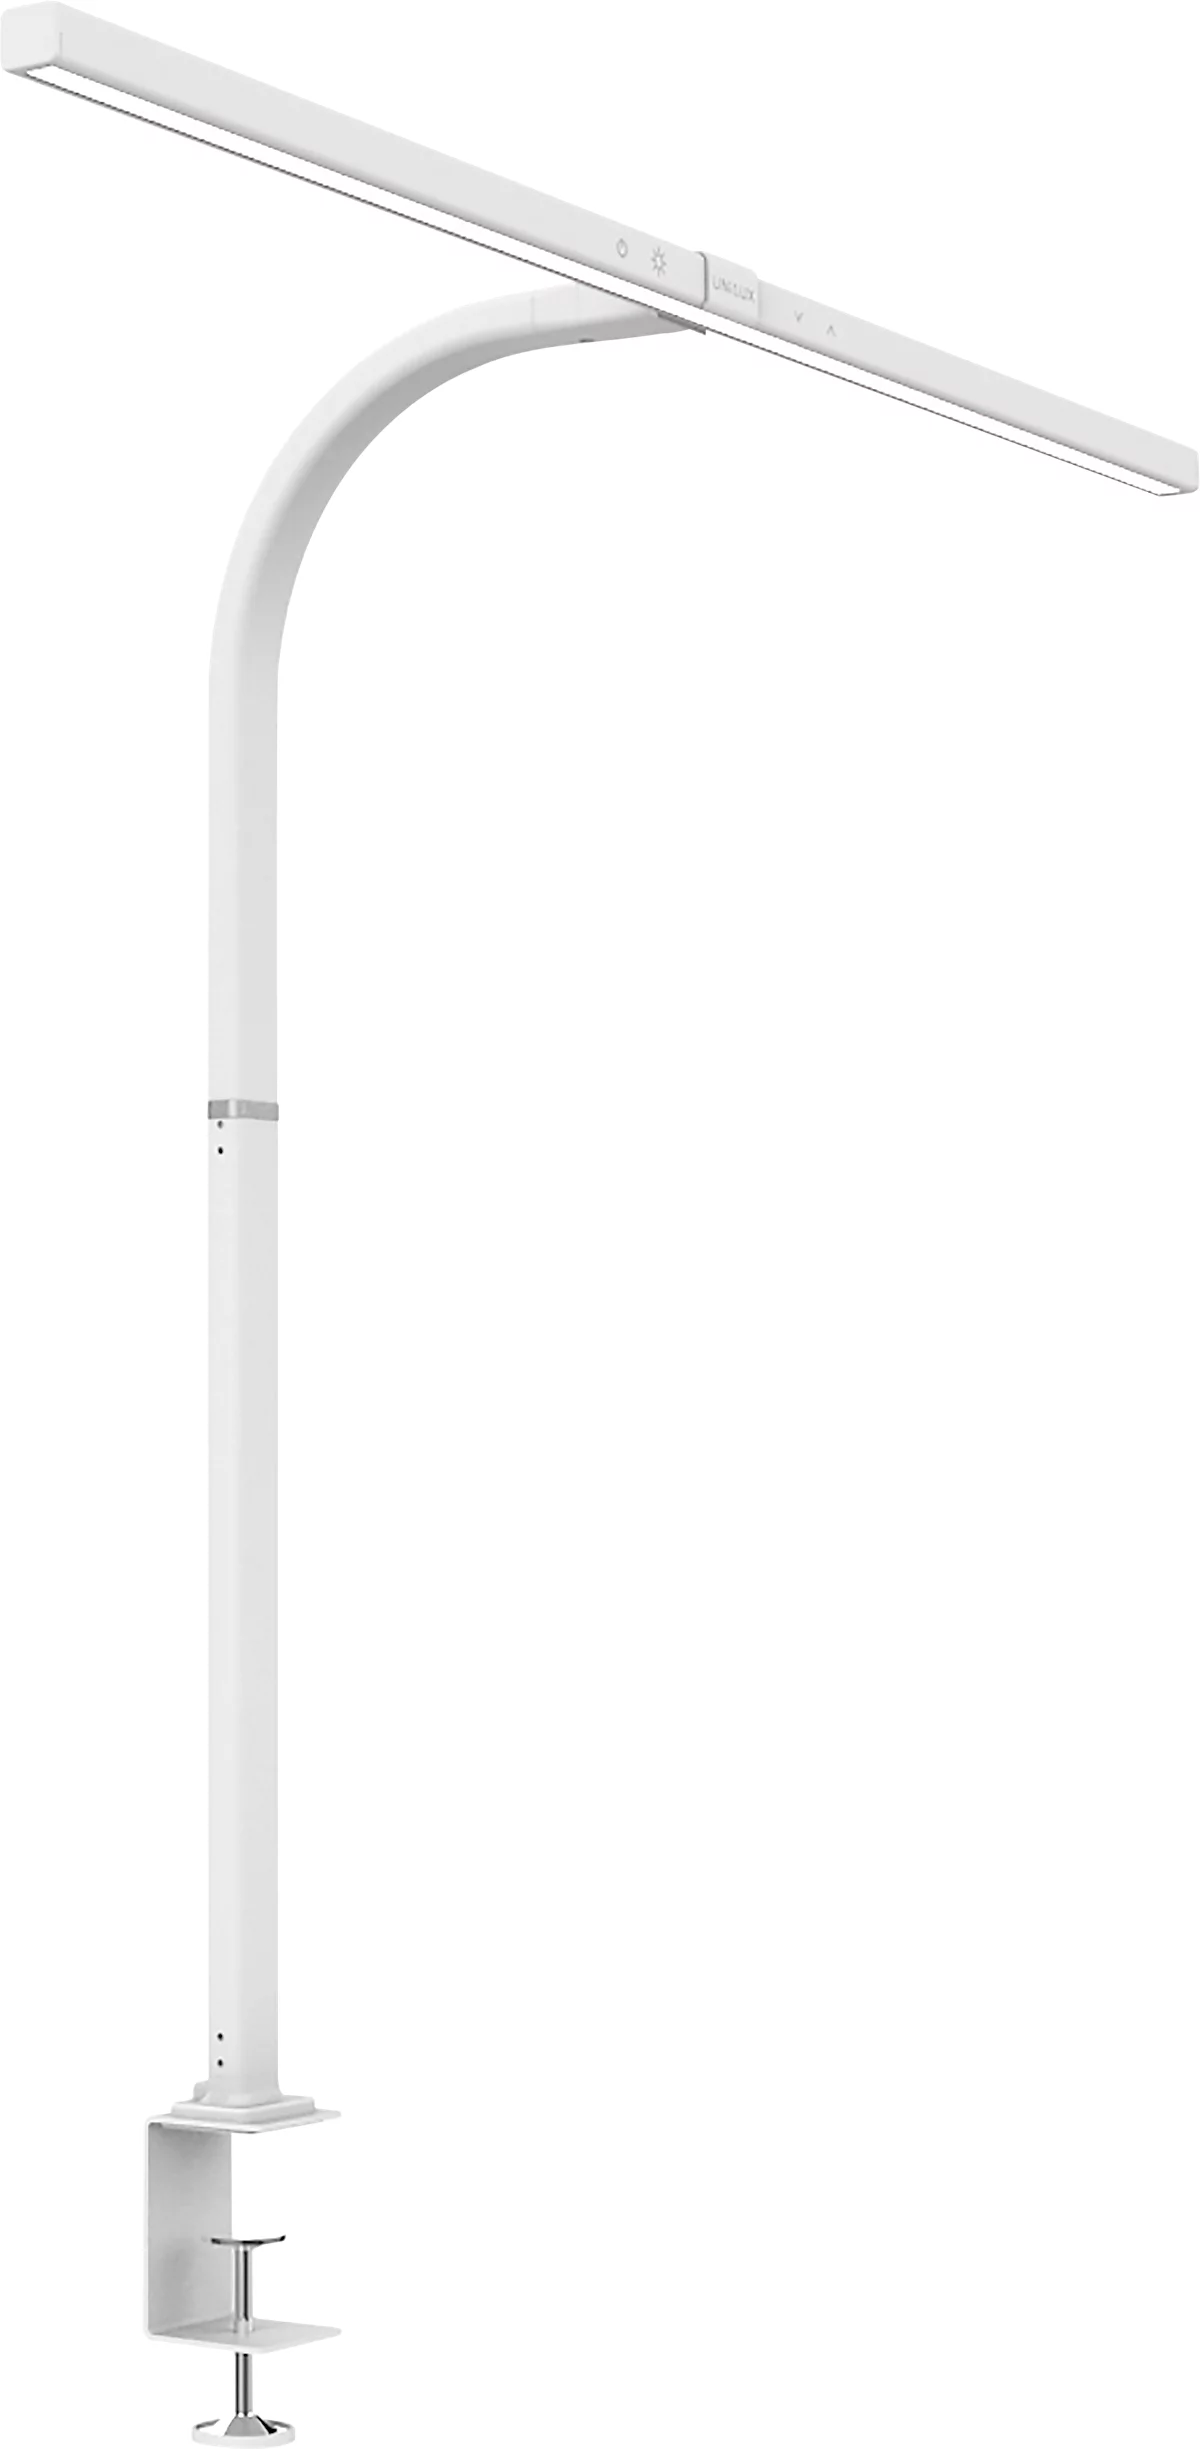 Lámpara de mesa LED UNILUX Strata, 12,7 W, 800 lm, 3000-6000 K, 3 intensidades luminosas, regulable y orientable, blanca